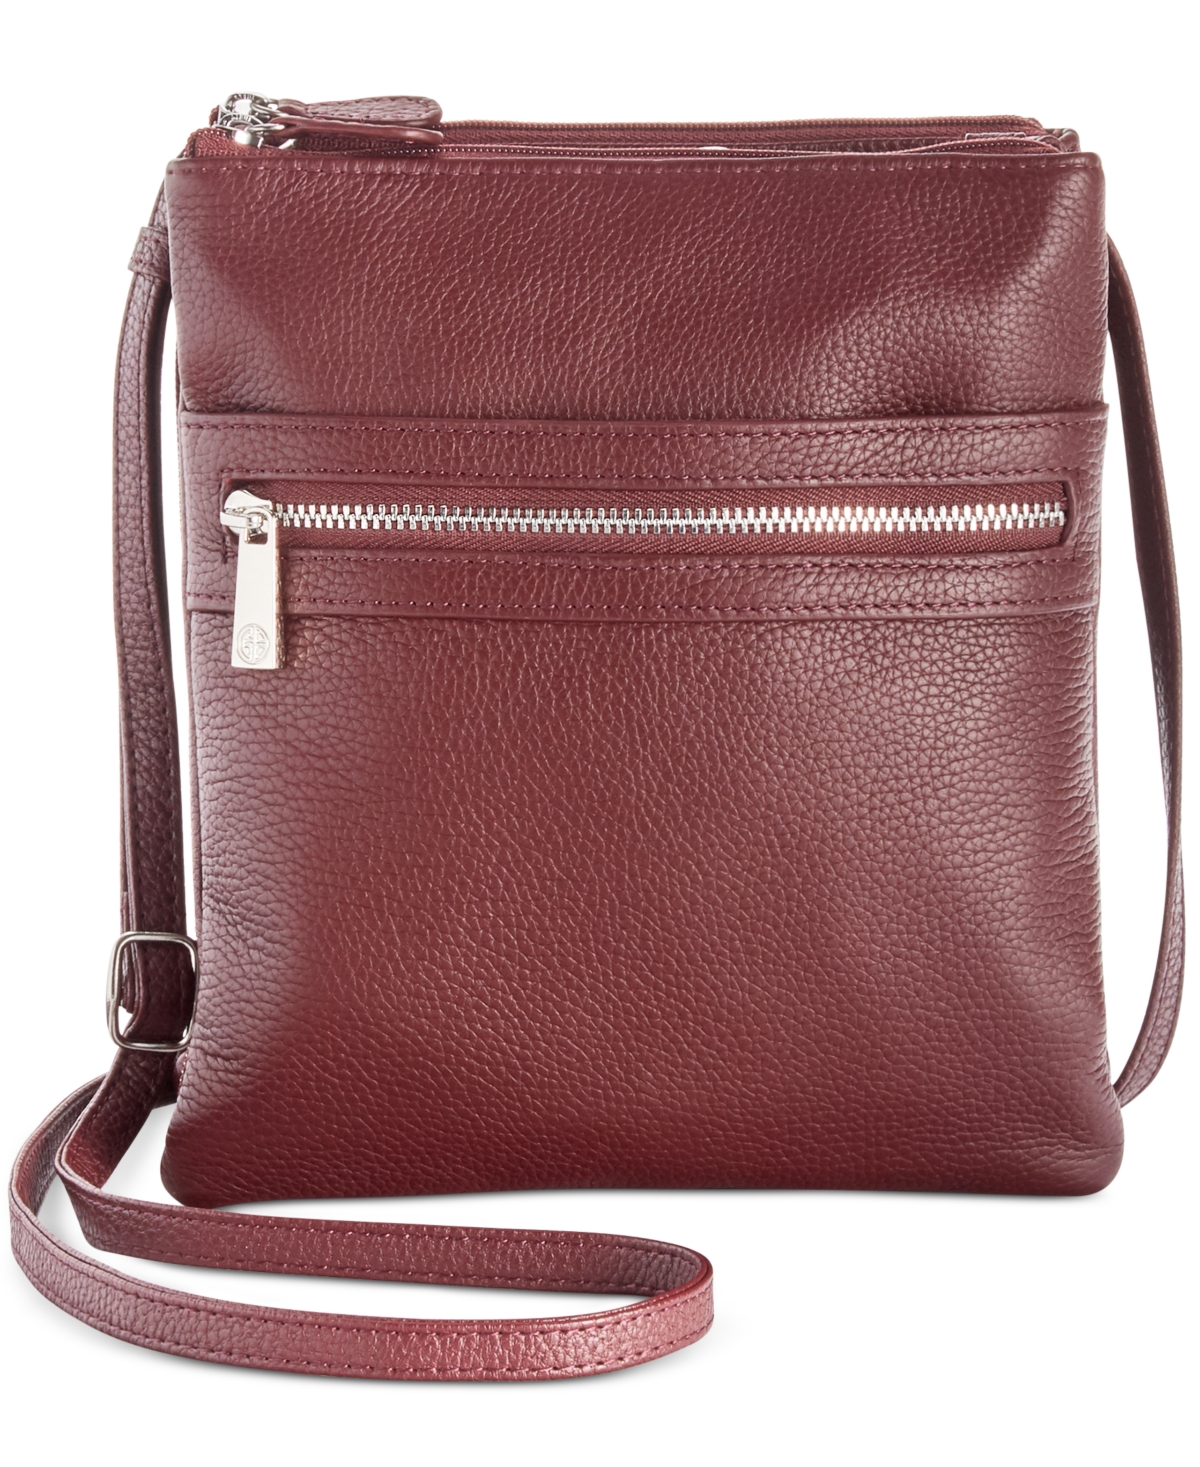 Giani Bernini Beige Leather Tote Handbag Purse – Trend4friends